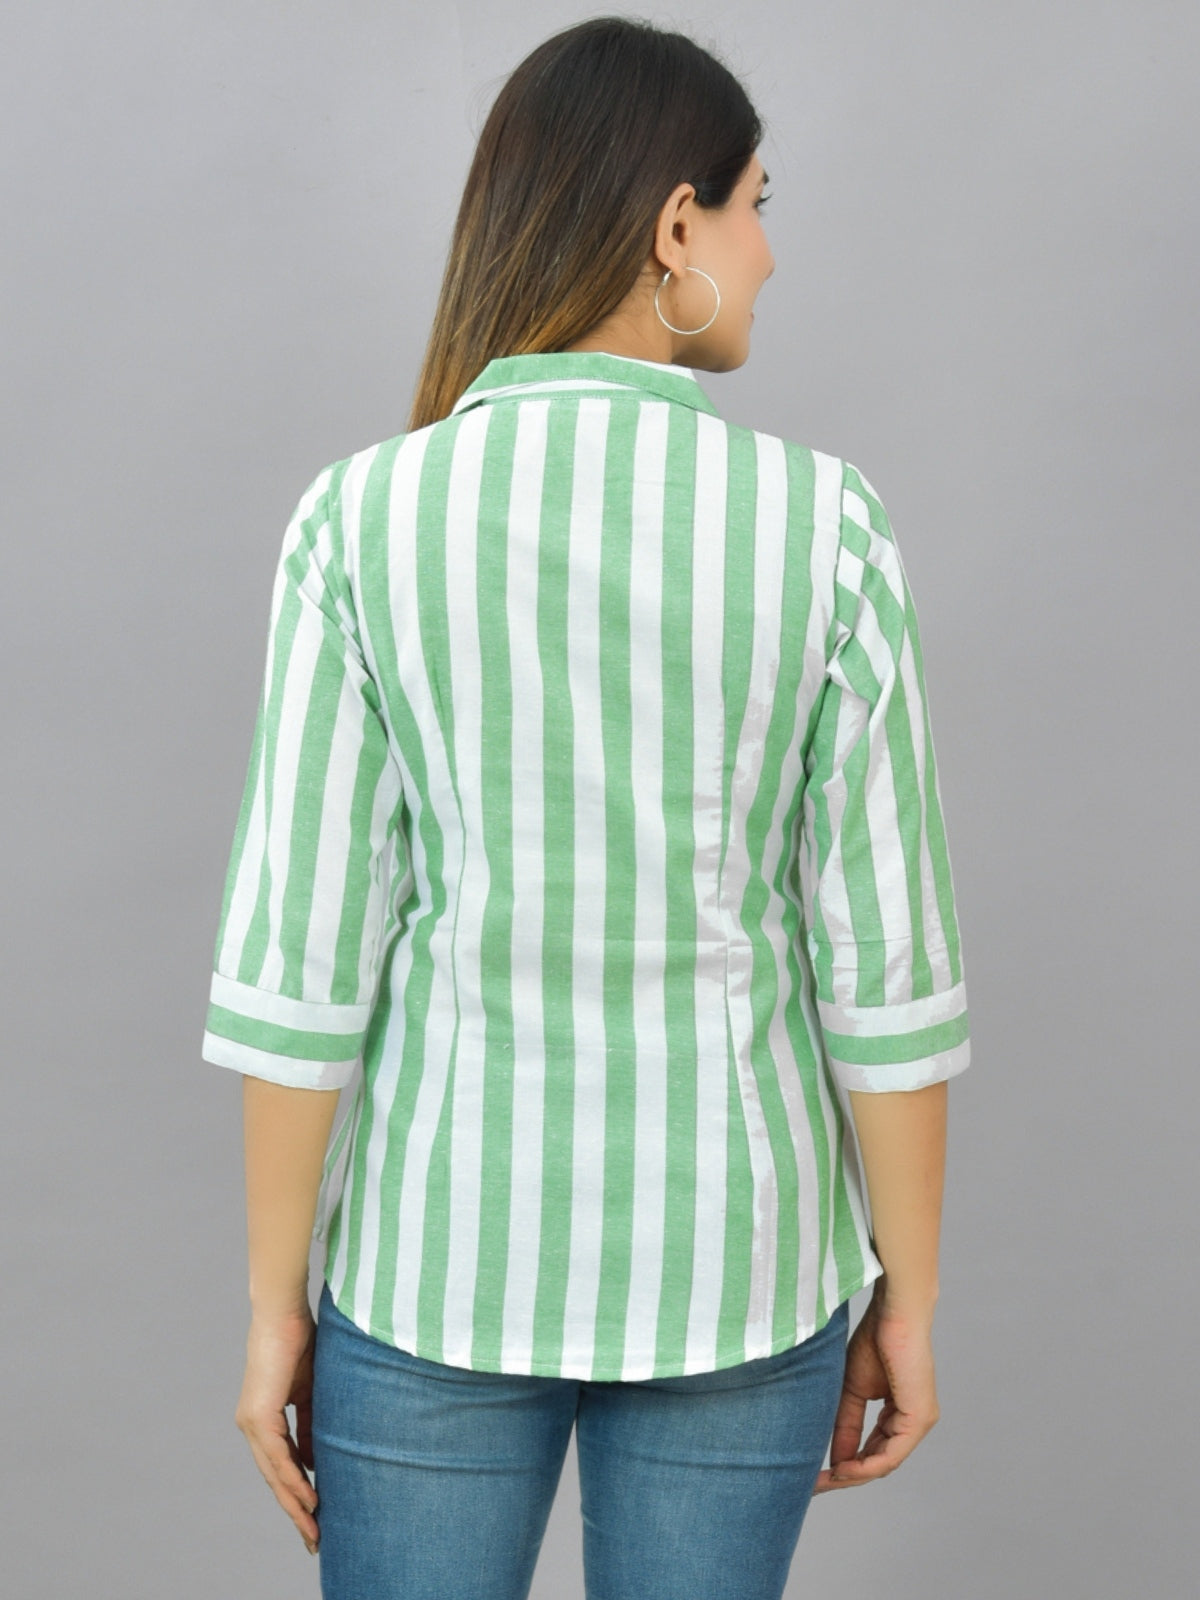 Womens Parrot Green Regular Fit Striped Cotton Spread Collar Casual Shirt